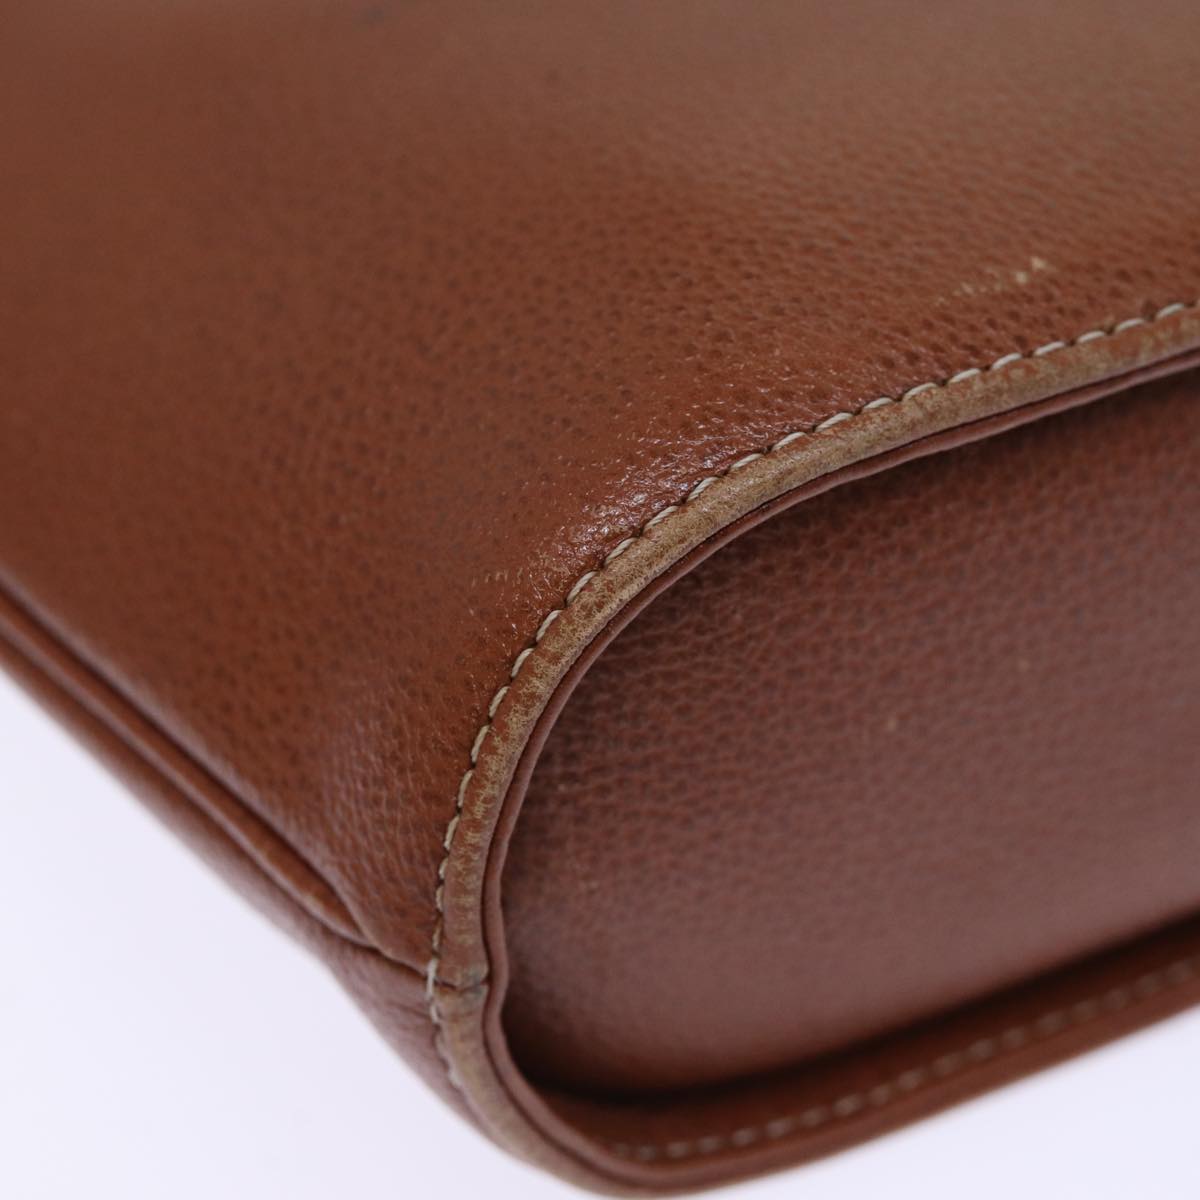 SAINT LAURENT Hand Bag Leather 2way Brown Auth am6206